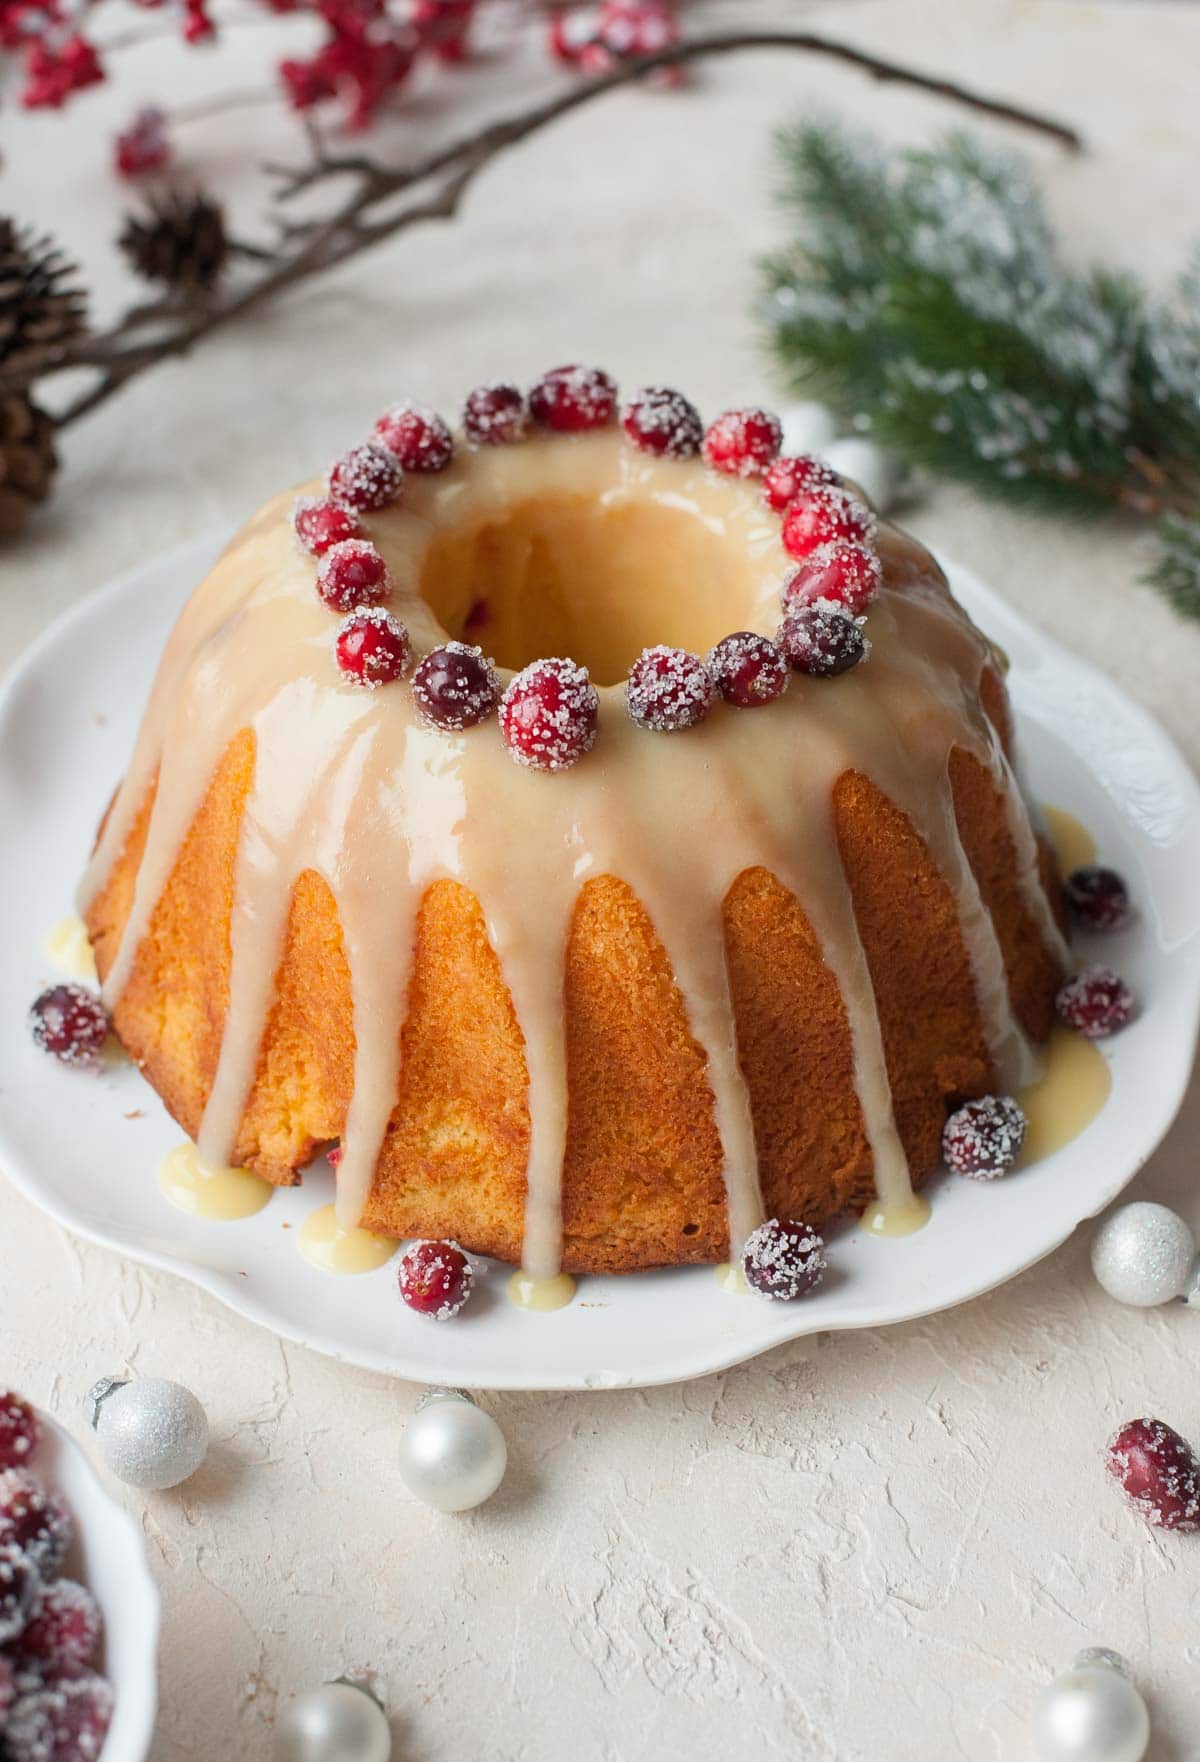 Glazed Orange Bundt Cake (baking with decorative bundt pans)